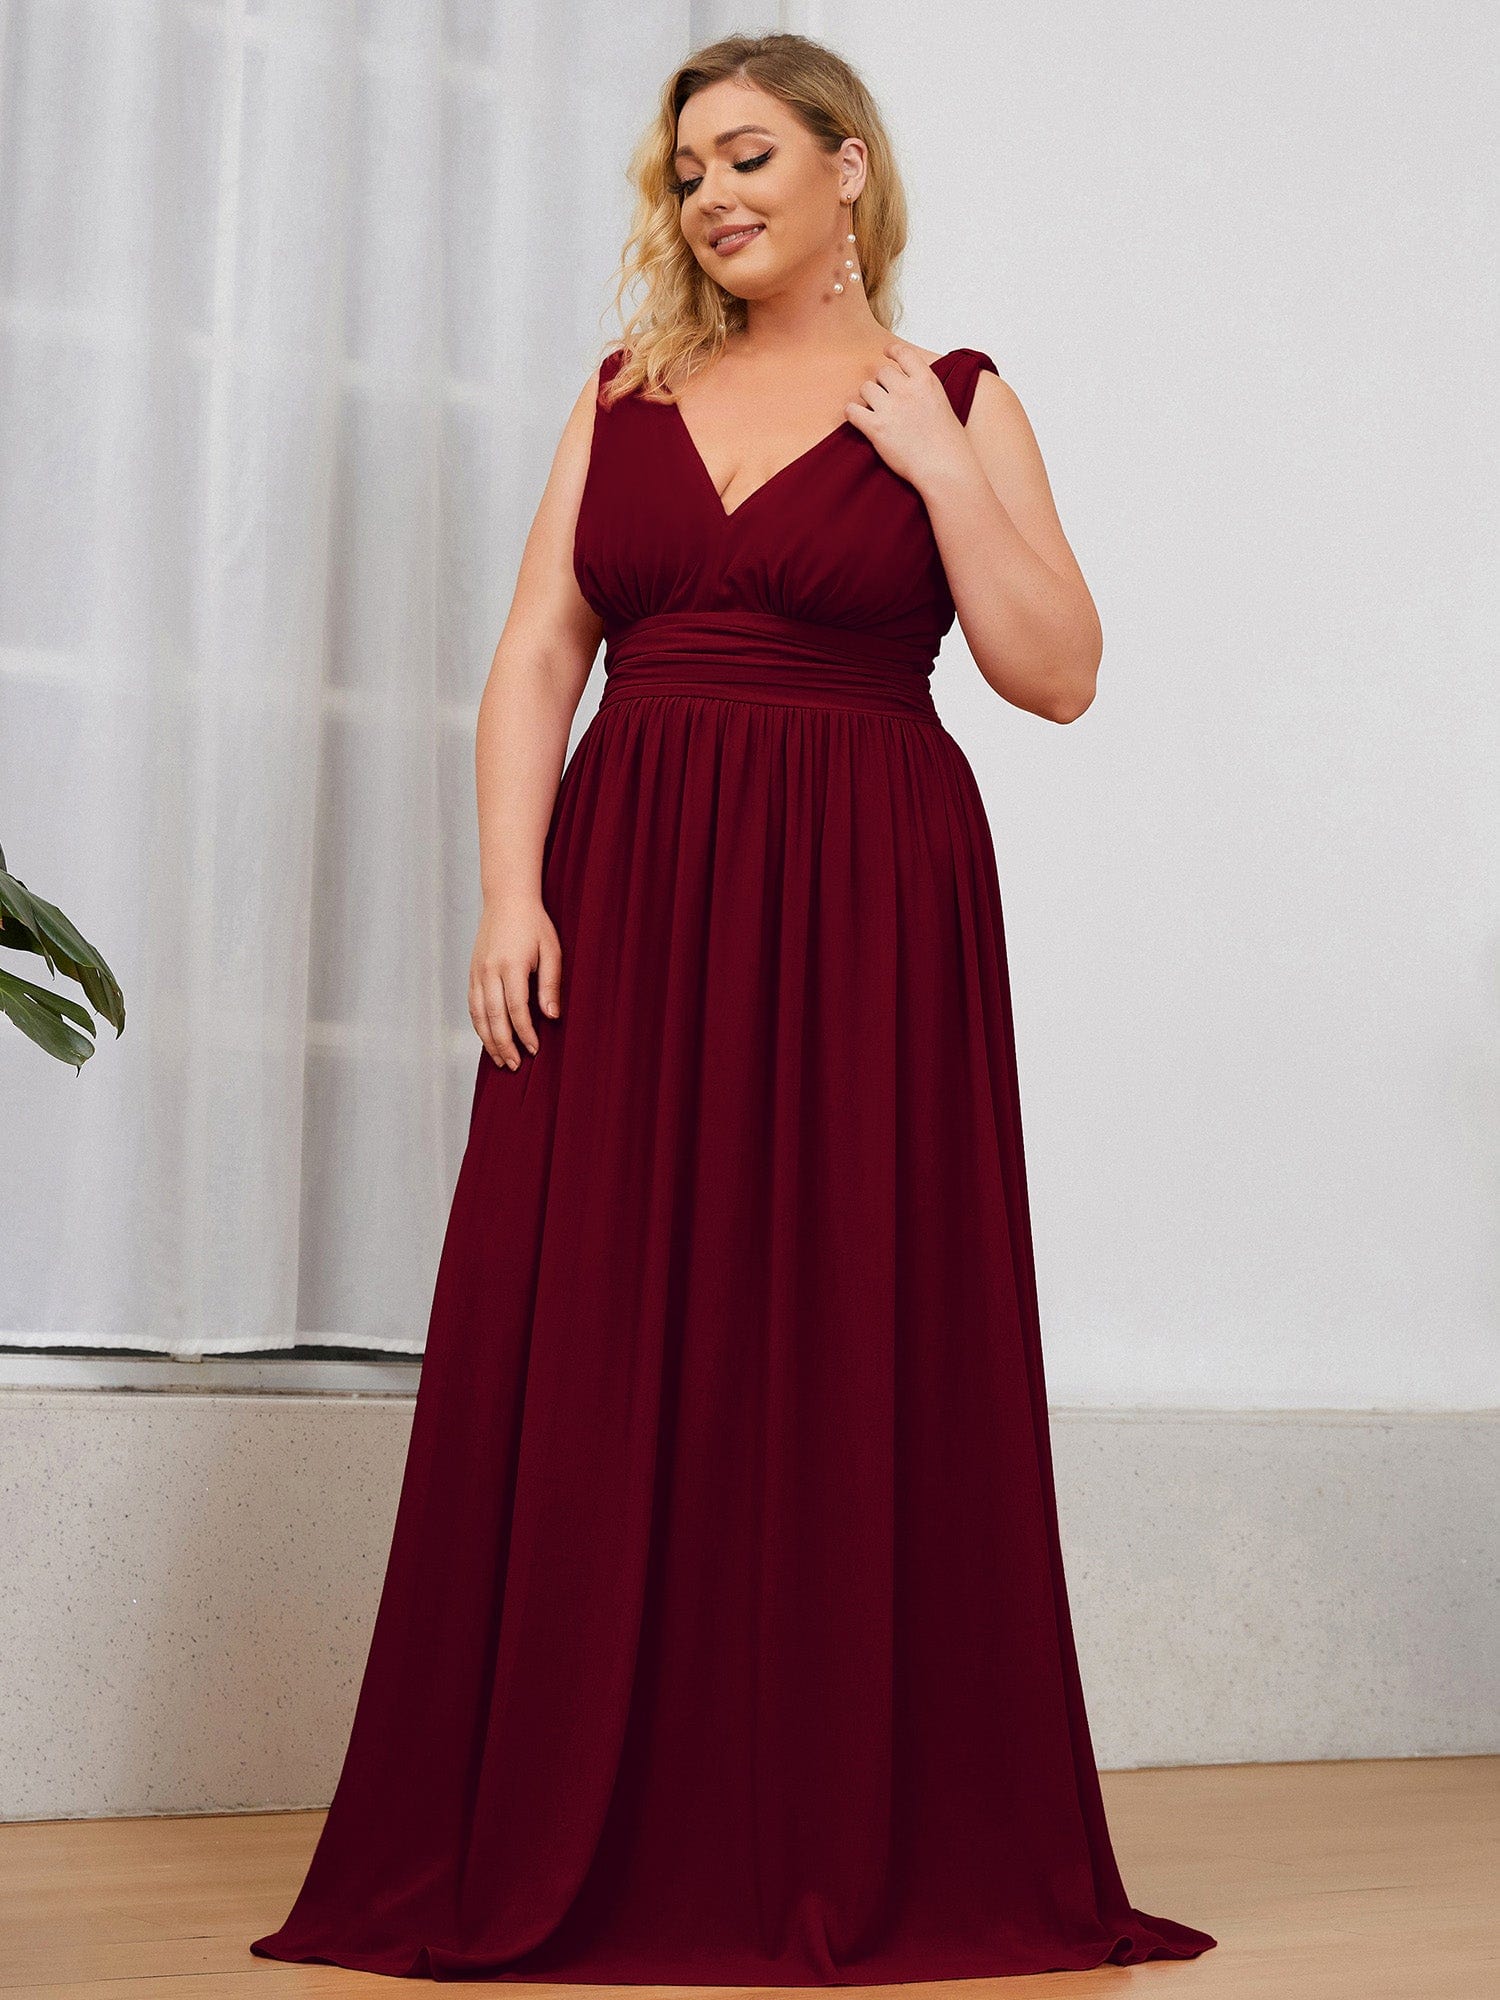 Buy Petite Plus Size Formal Dresses Online - Ever-Pretty US